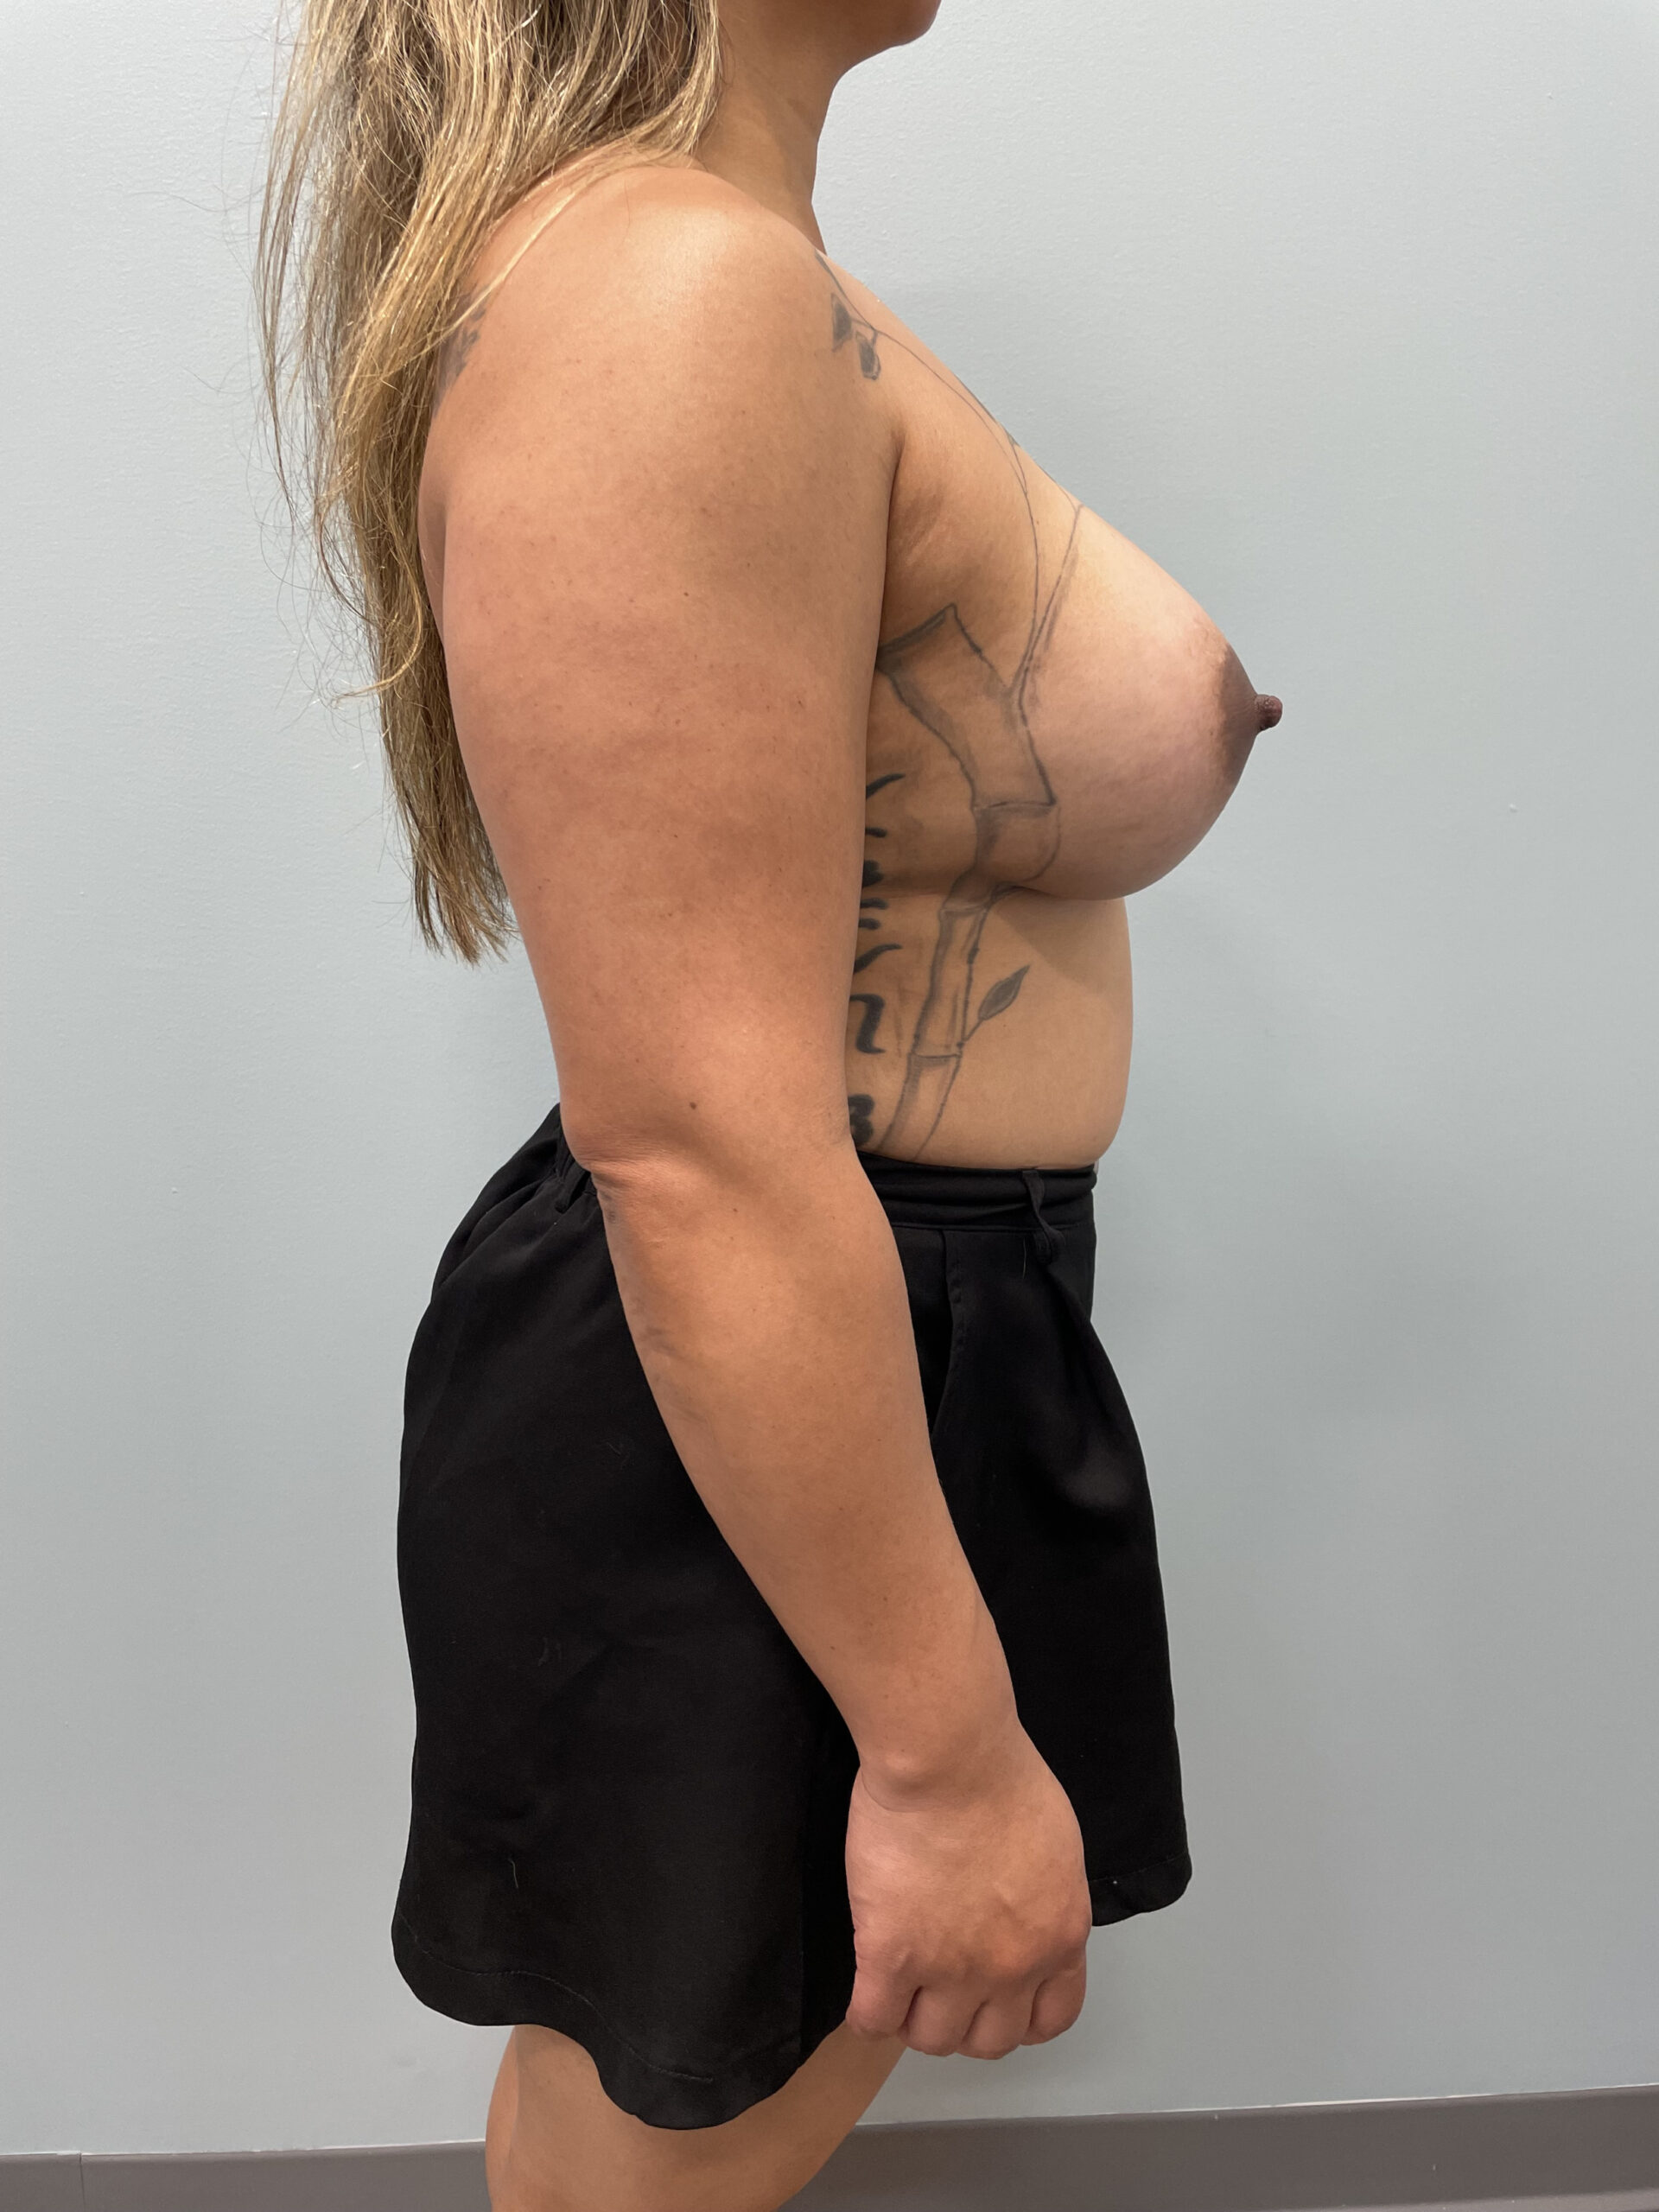 Breast Augmentation Patient Photo - Case 3723 - after view